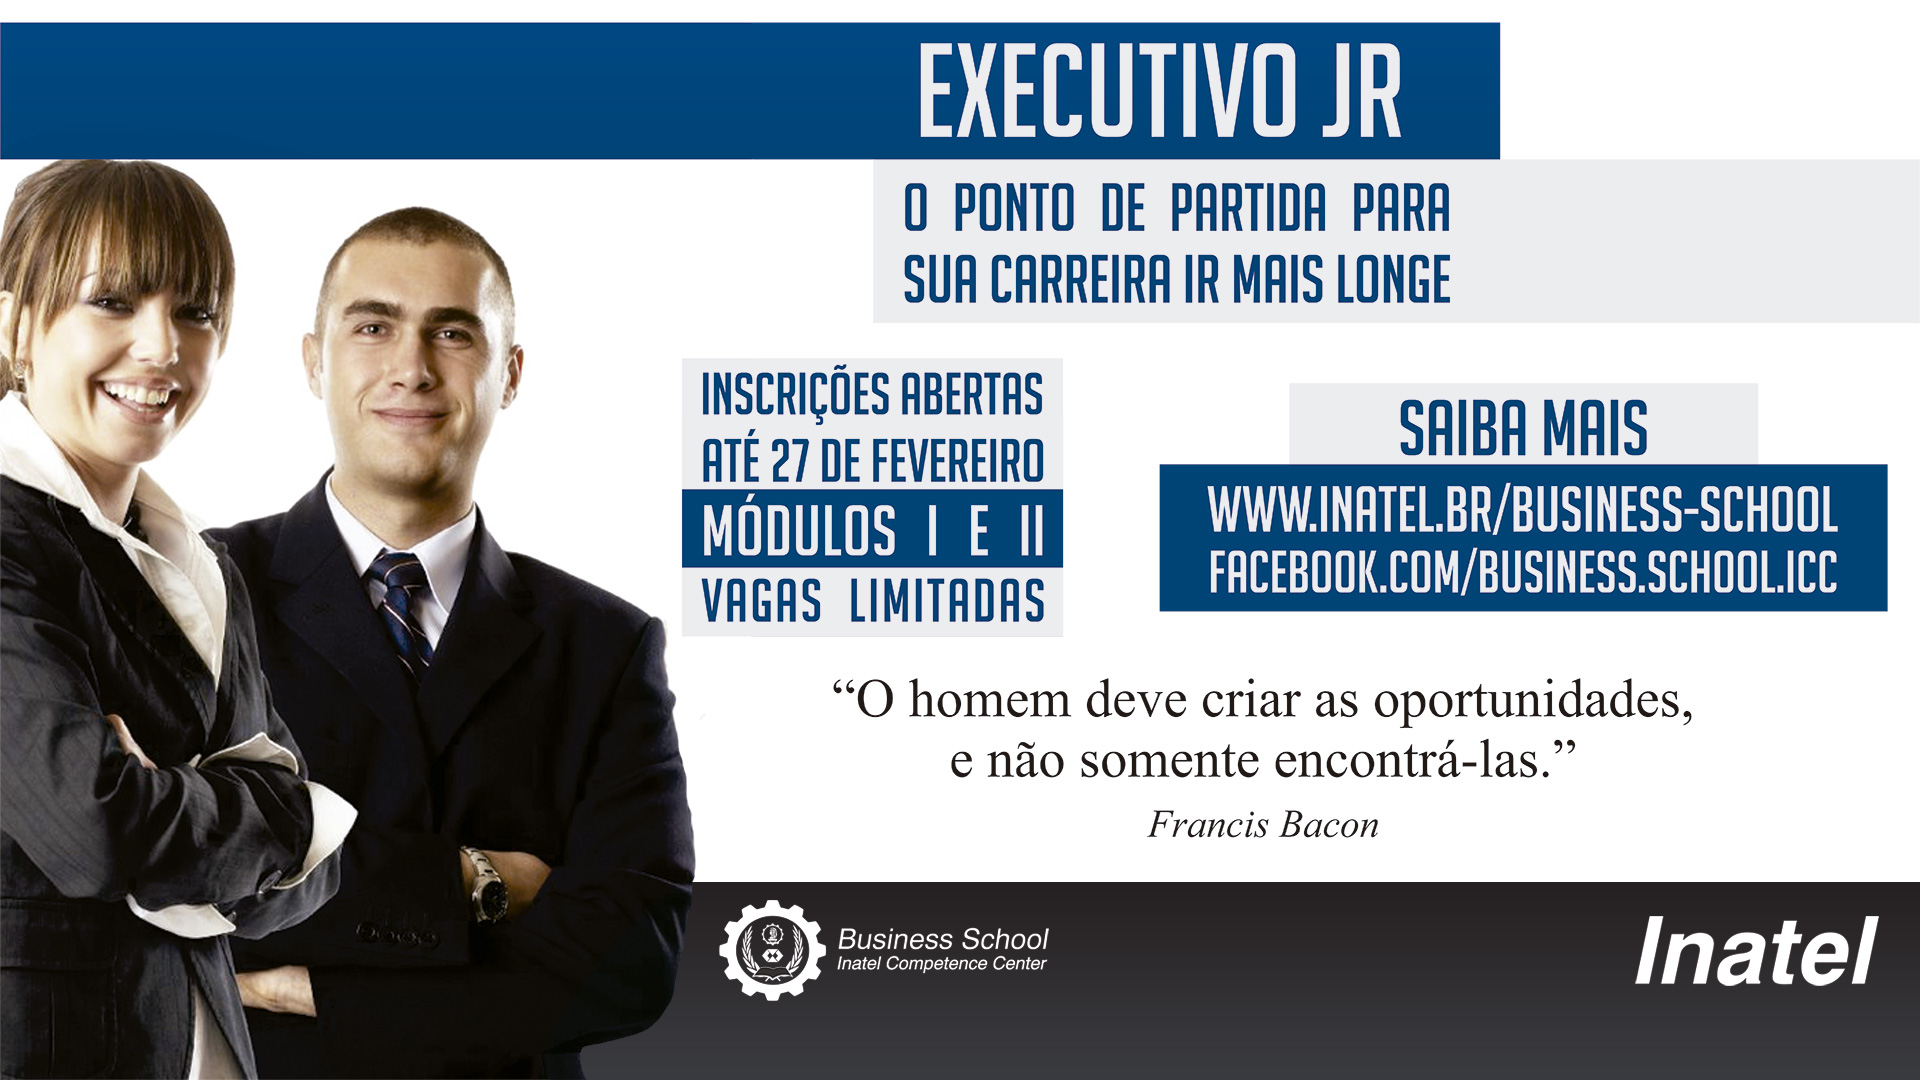 inatel-executivo-jr-fev-2013